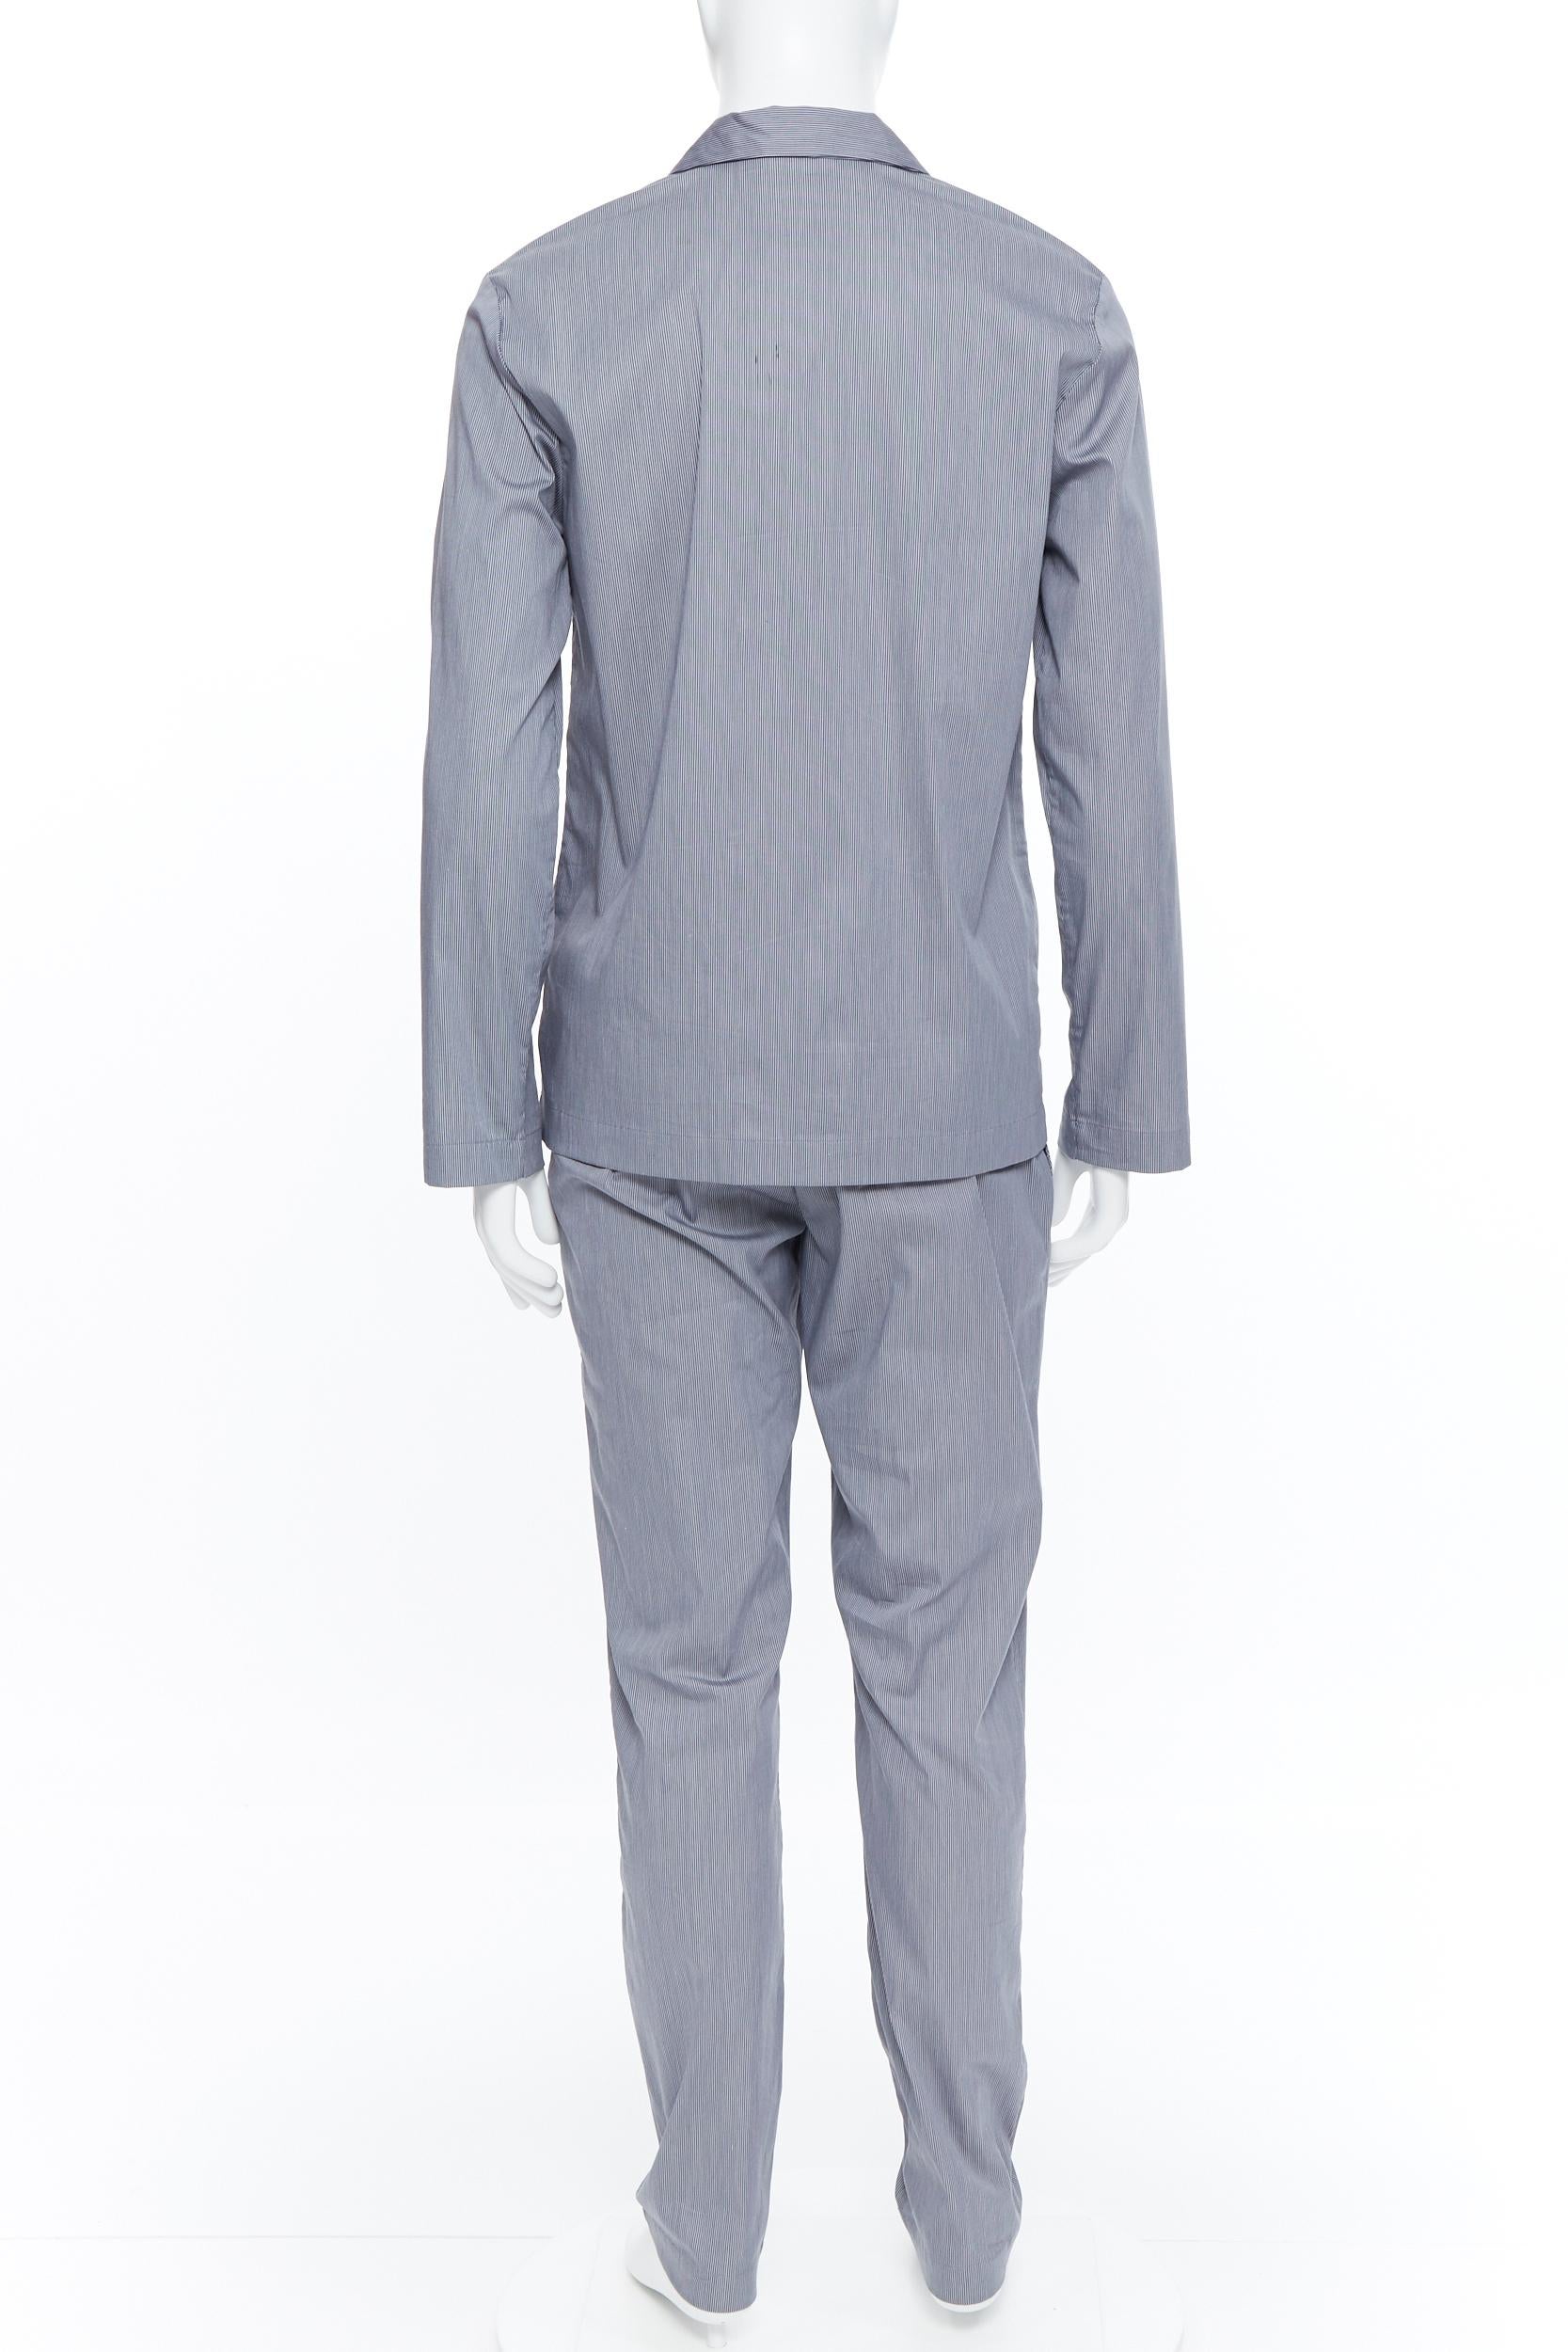 Men's new LA PERLA grey stripe cotton blend notched collar pyjama set pants M